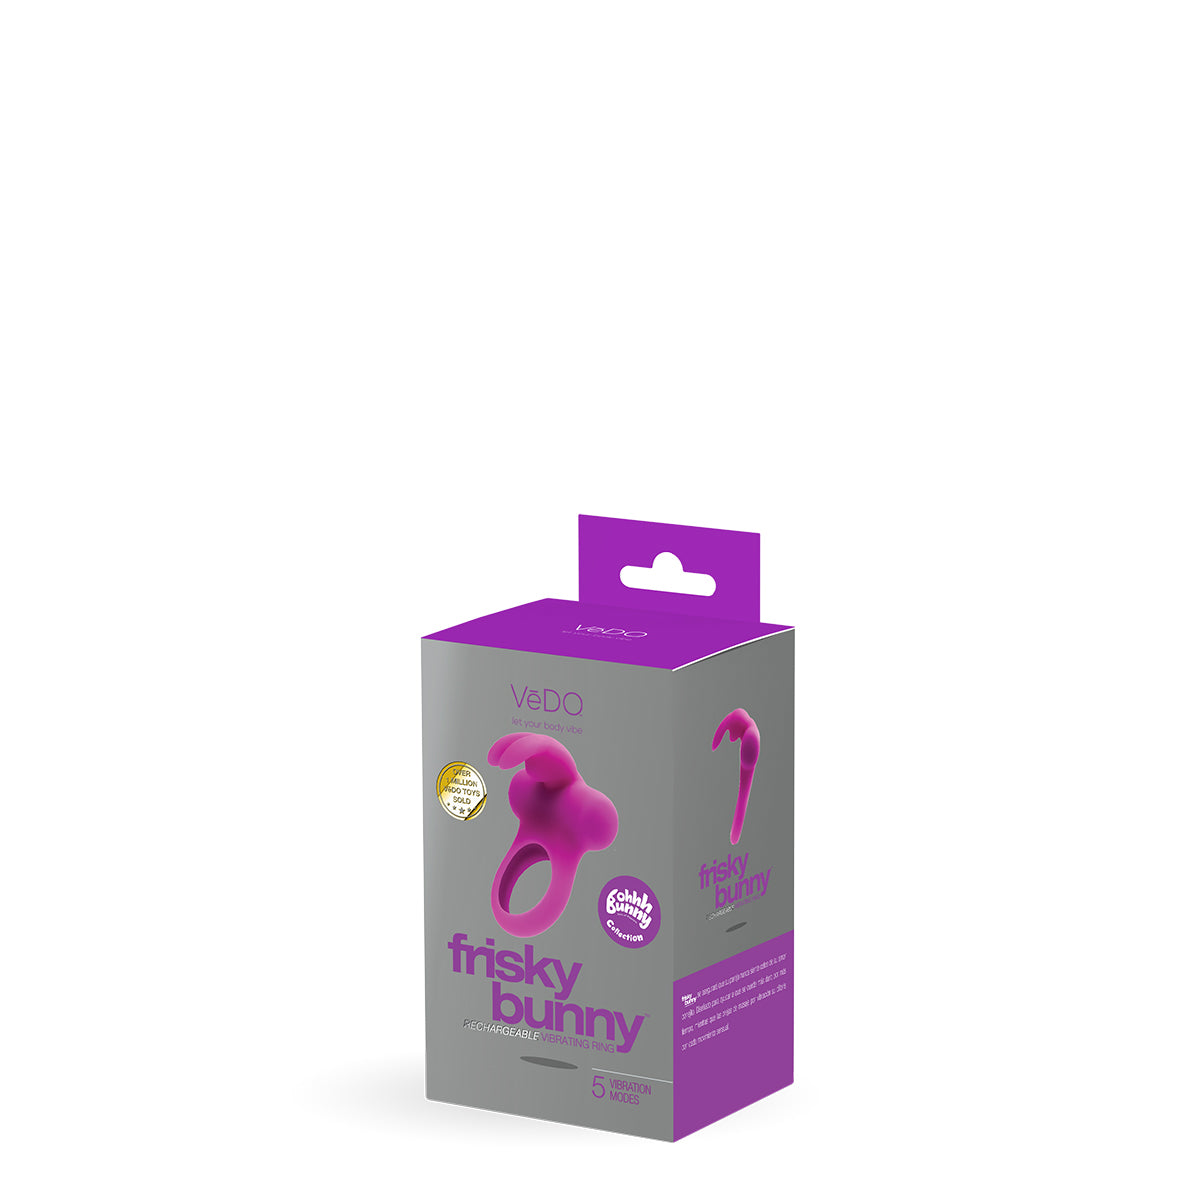 VeDO Frisky Bunny - Purple Intimates Adult Boutique